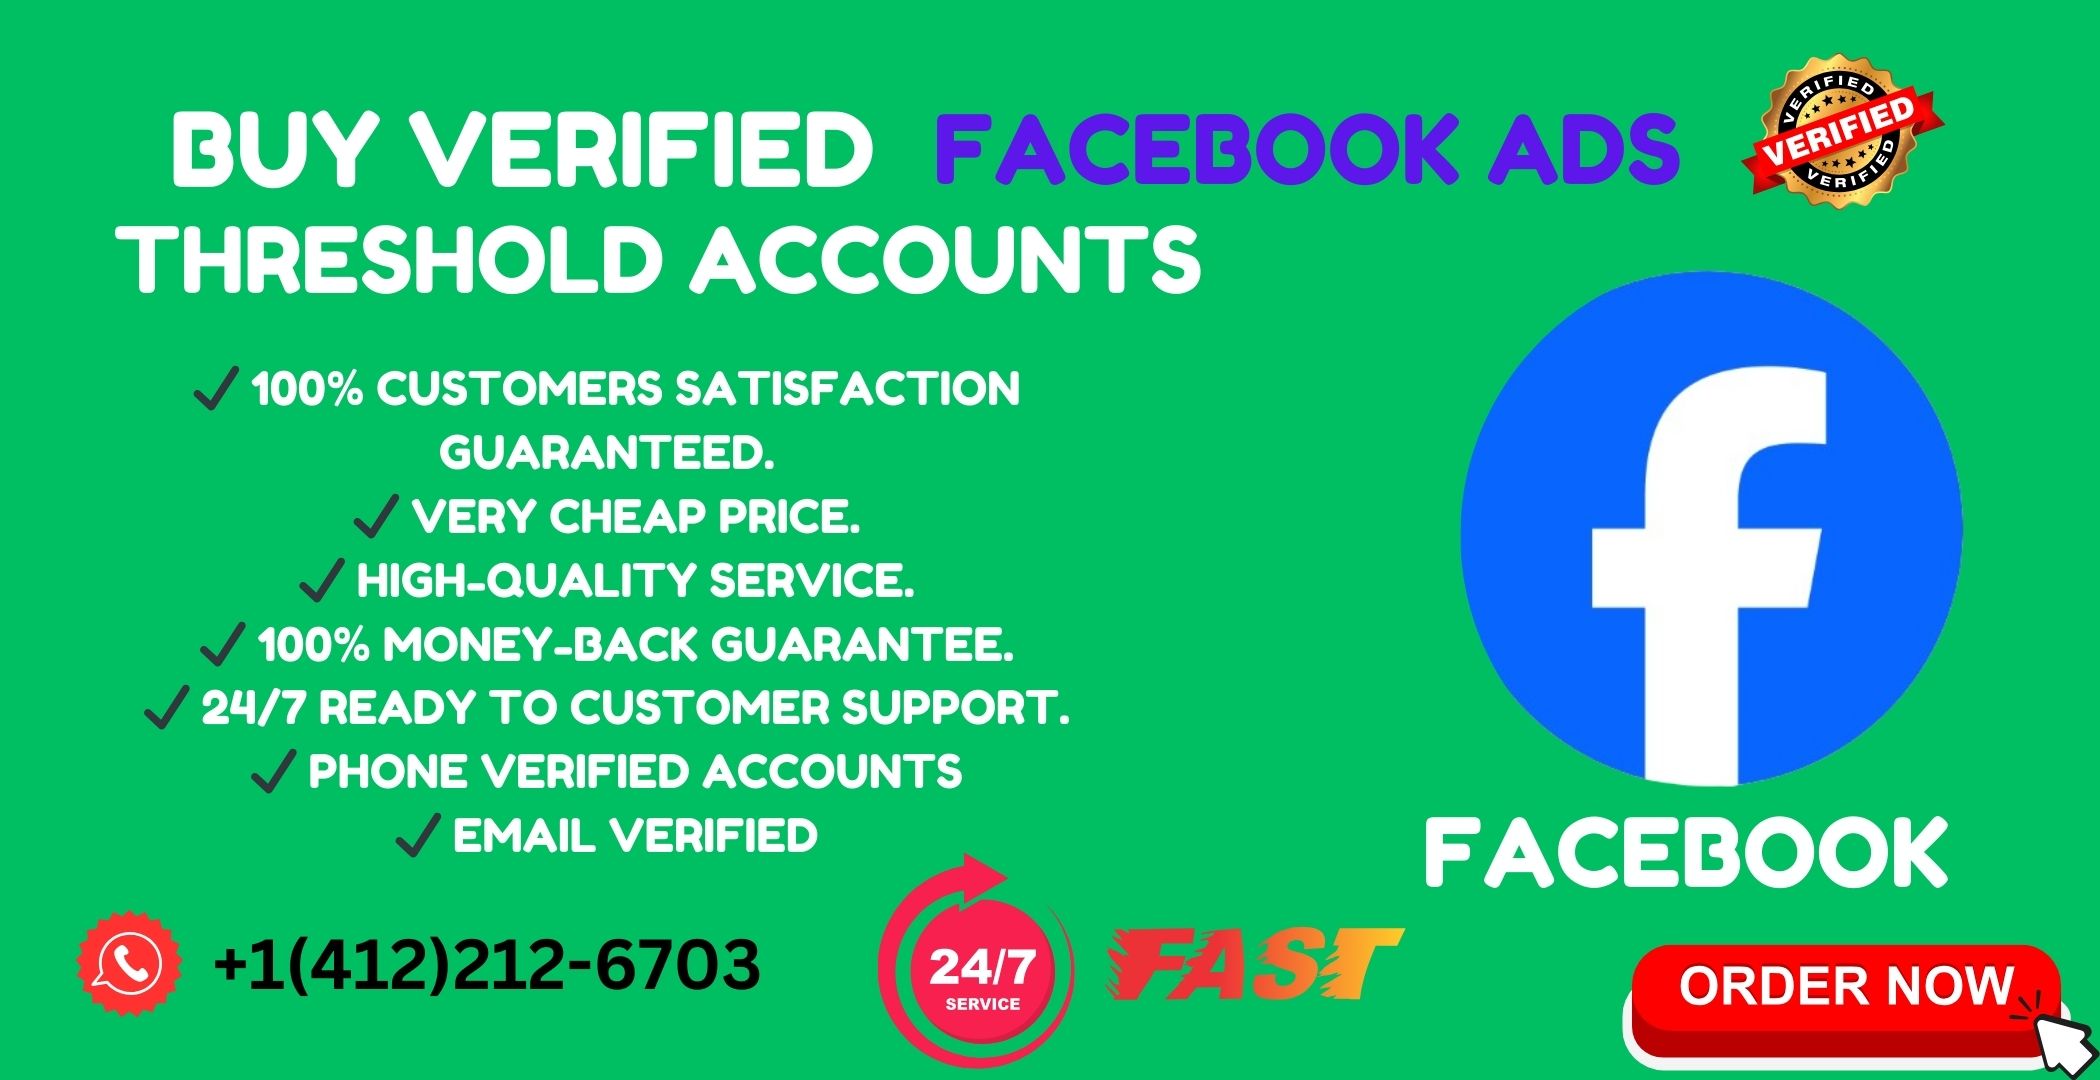 Buy-Facebook-Ads-Threshold-Accounts-2.jpg
